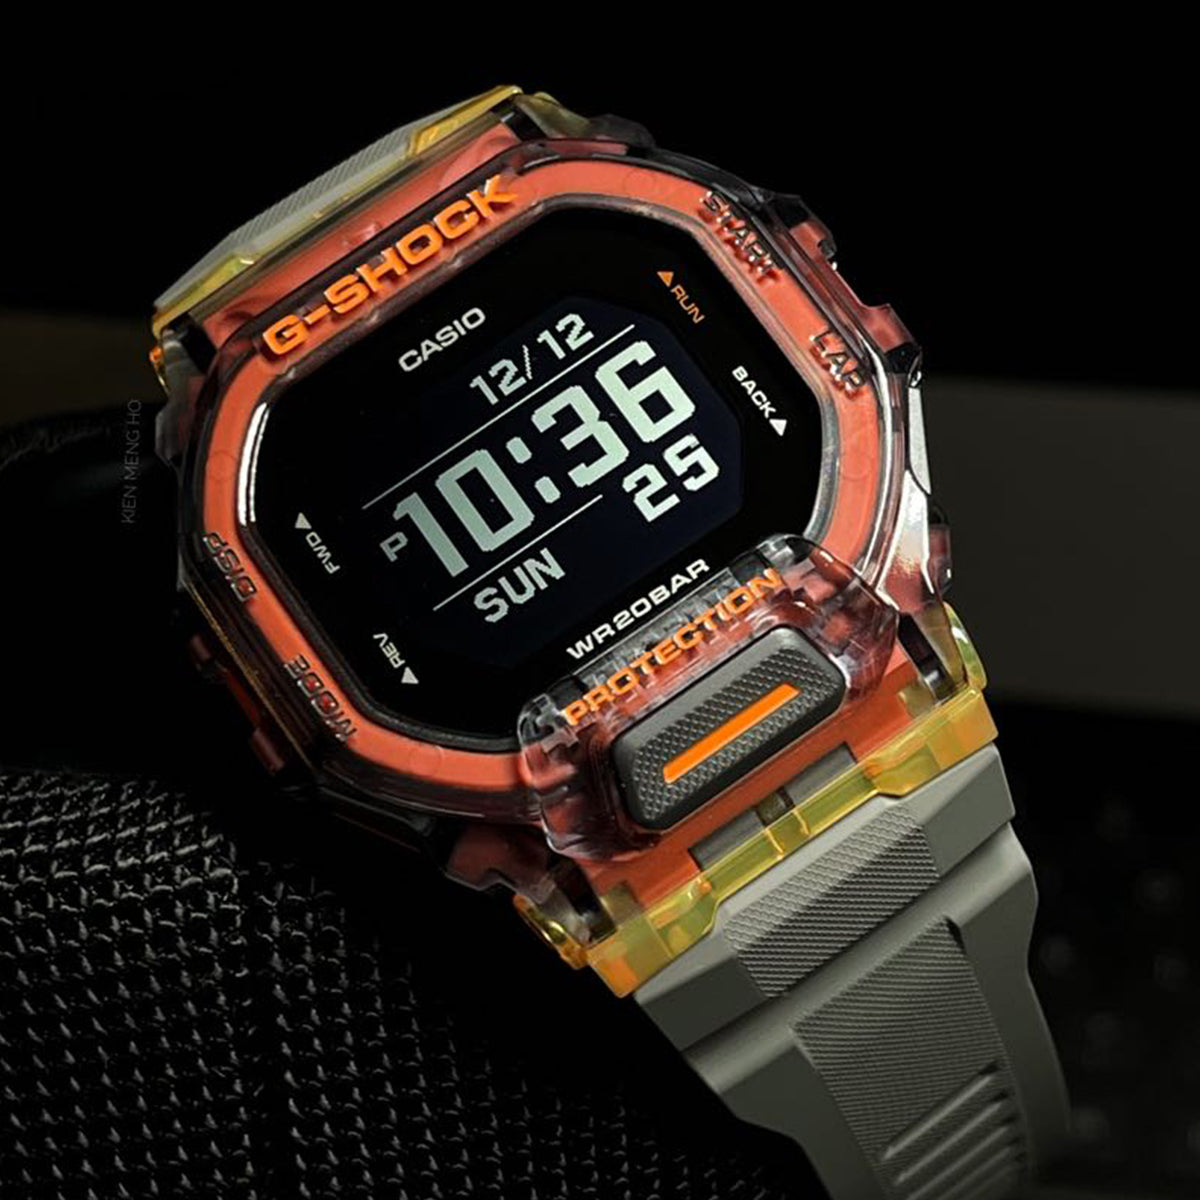 Casio - G-Shock - GBD-200SM-1A5DR